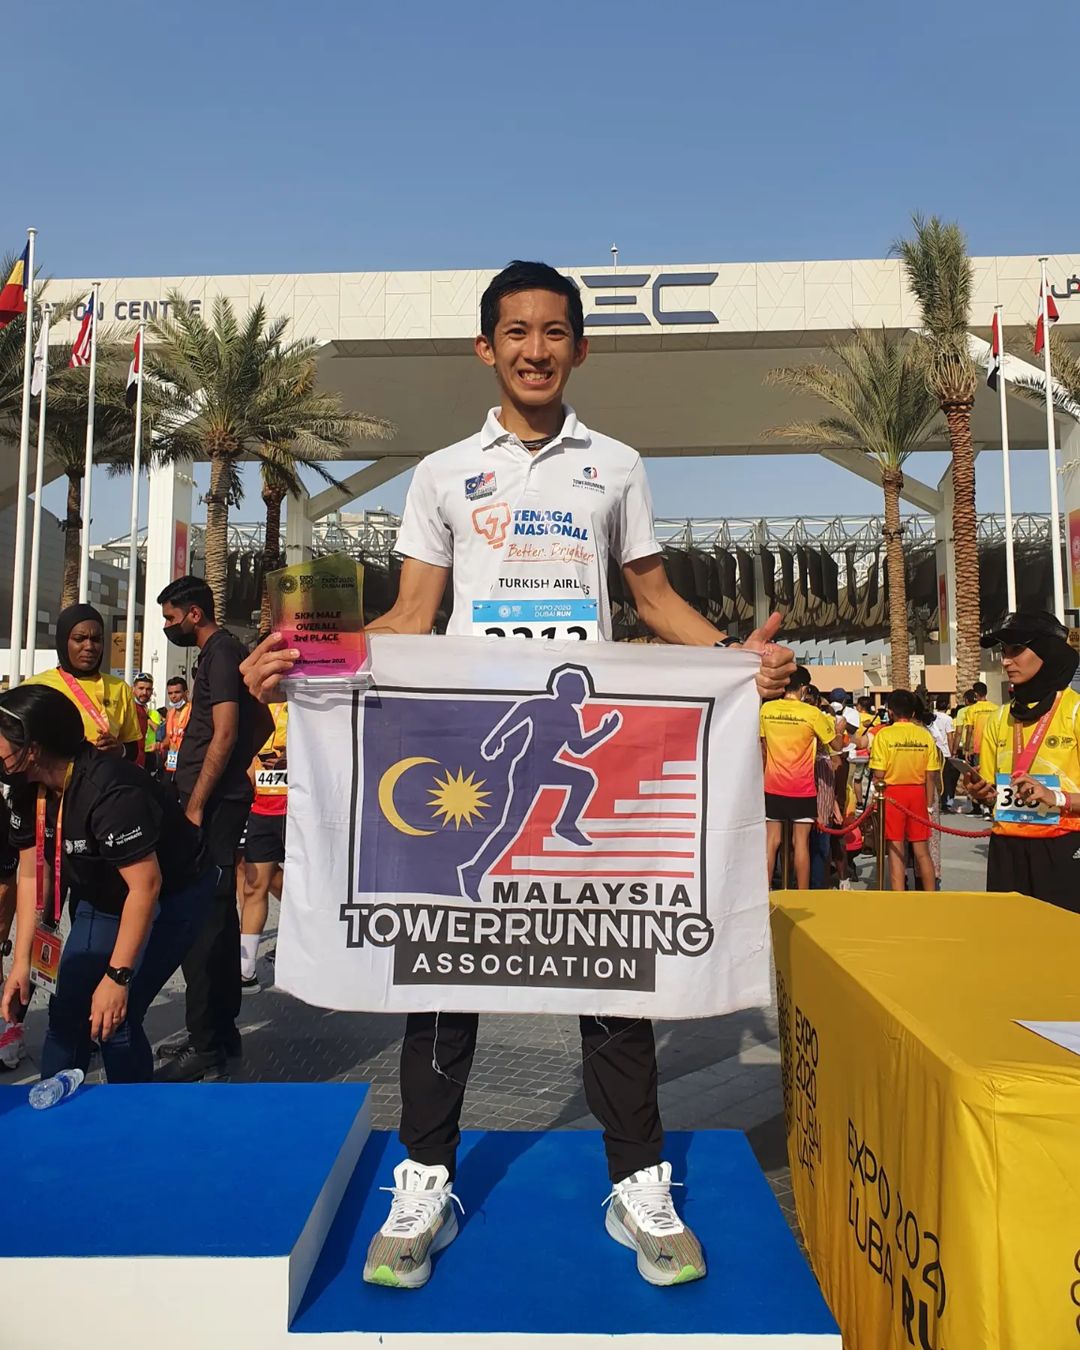 Malaysian tower runner